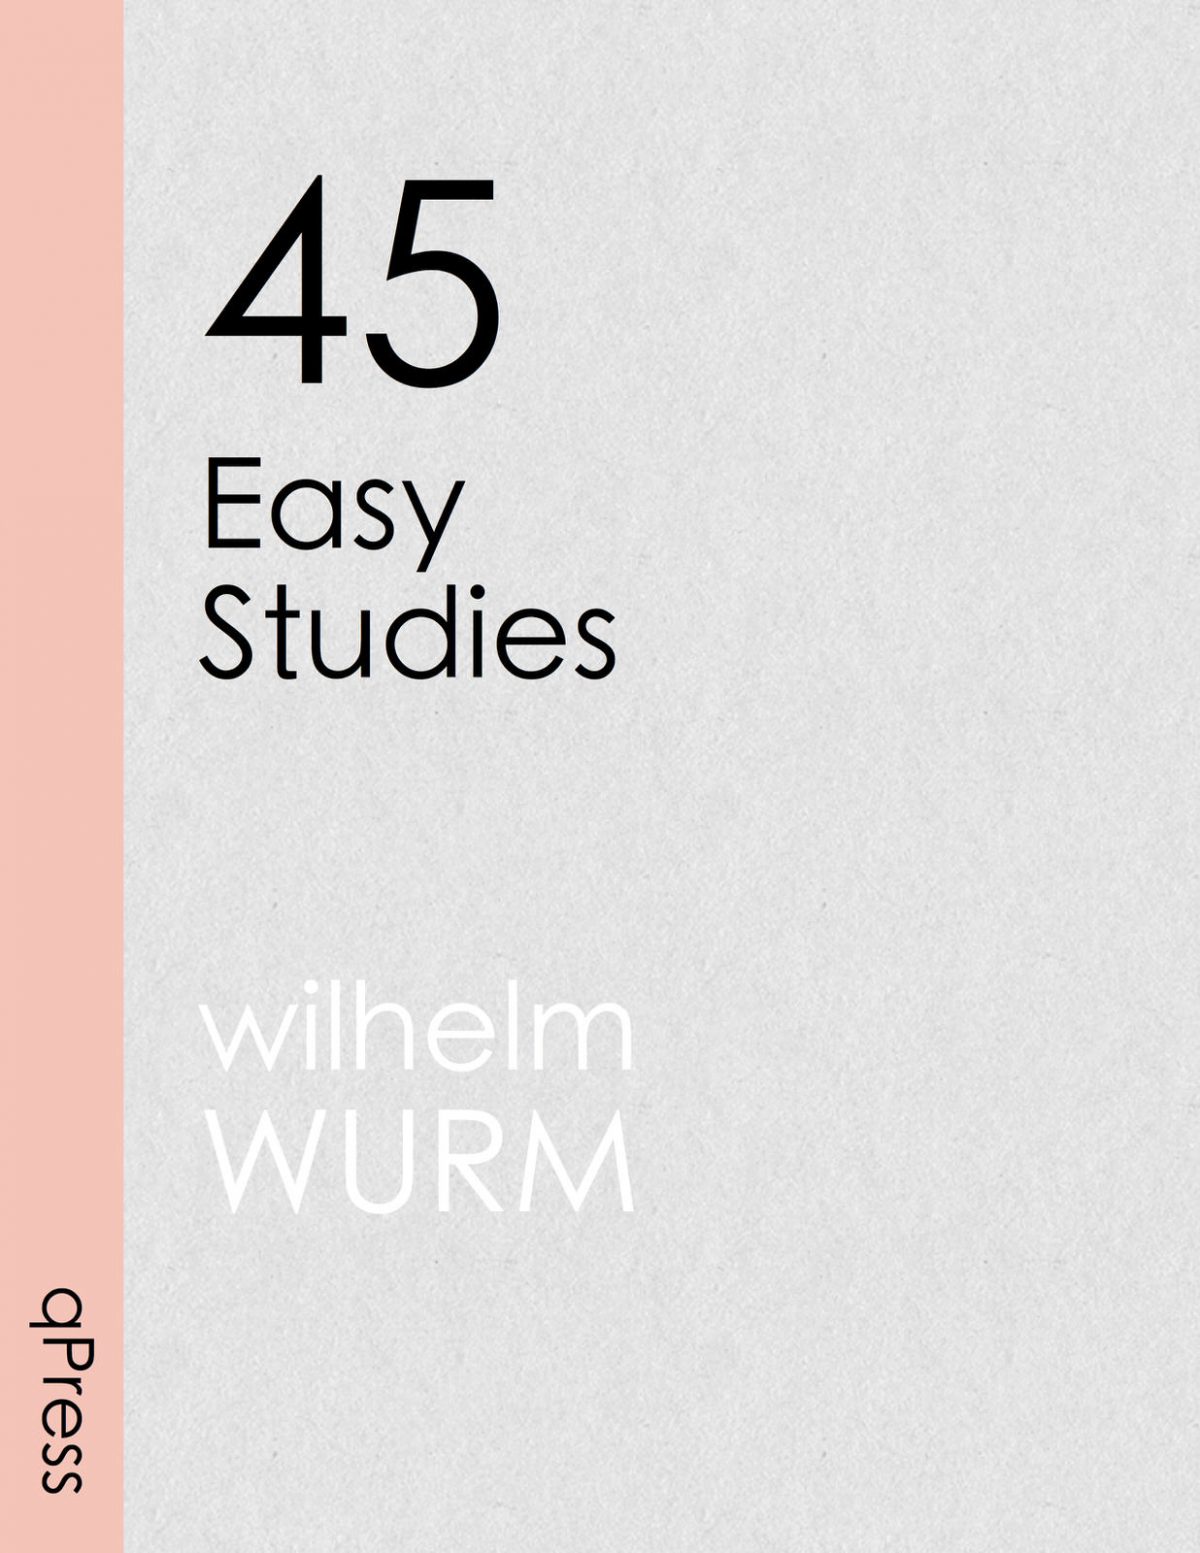 wurm-45-easy-studies